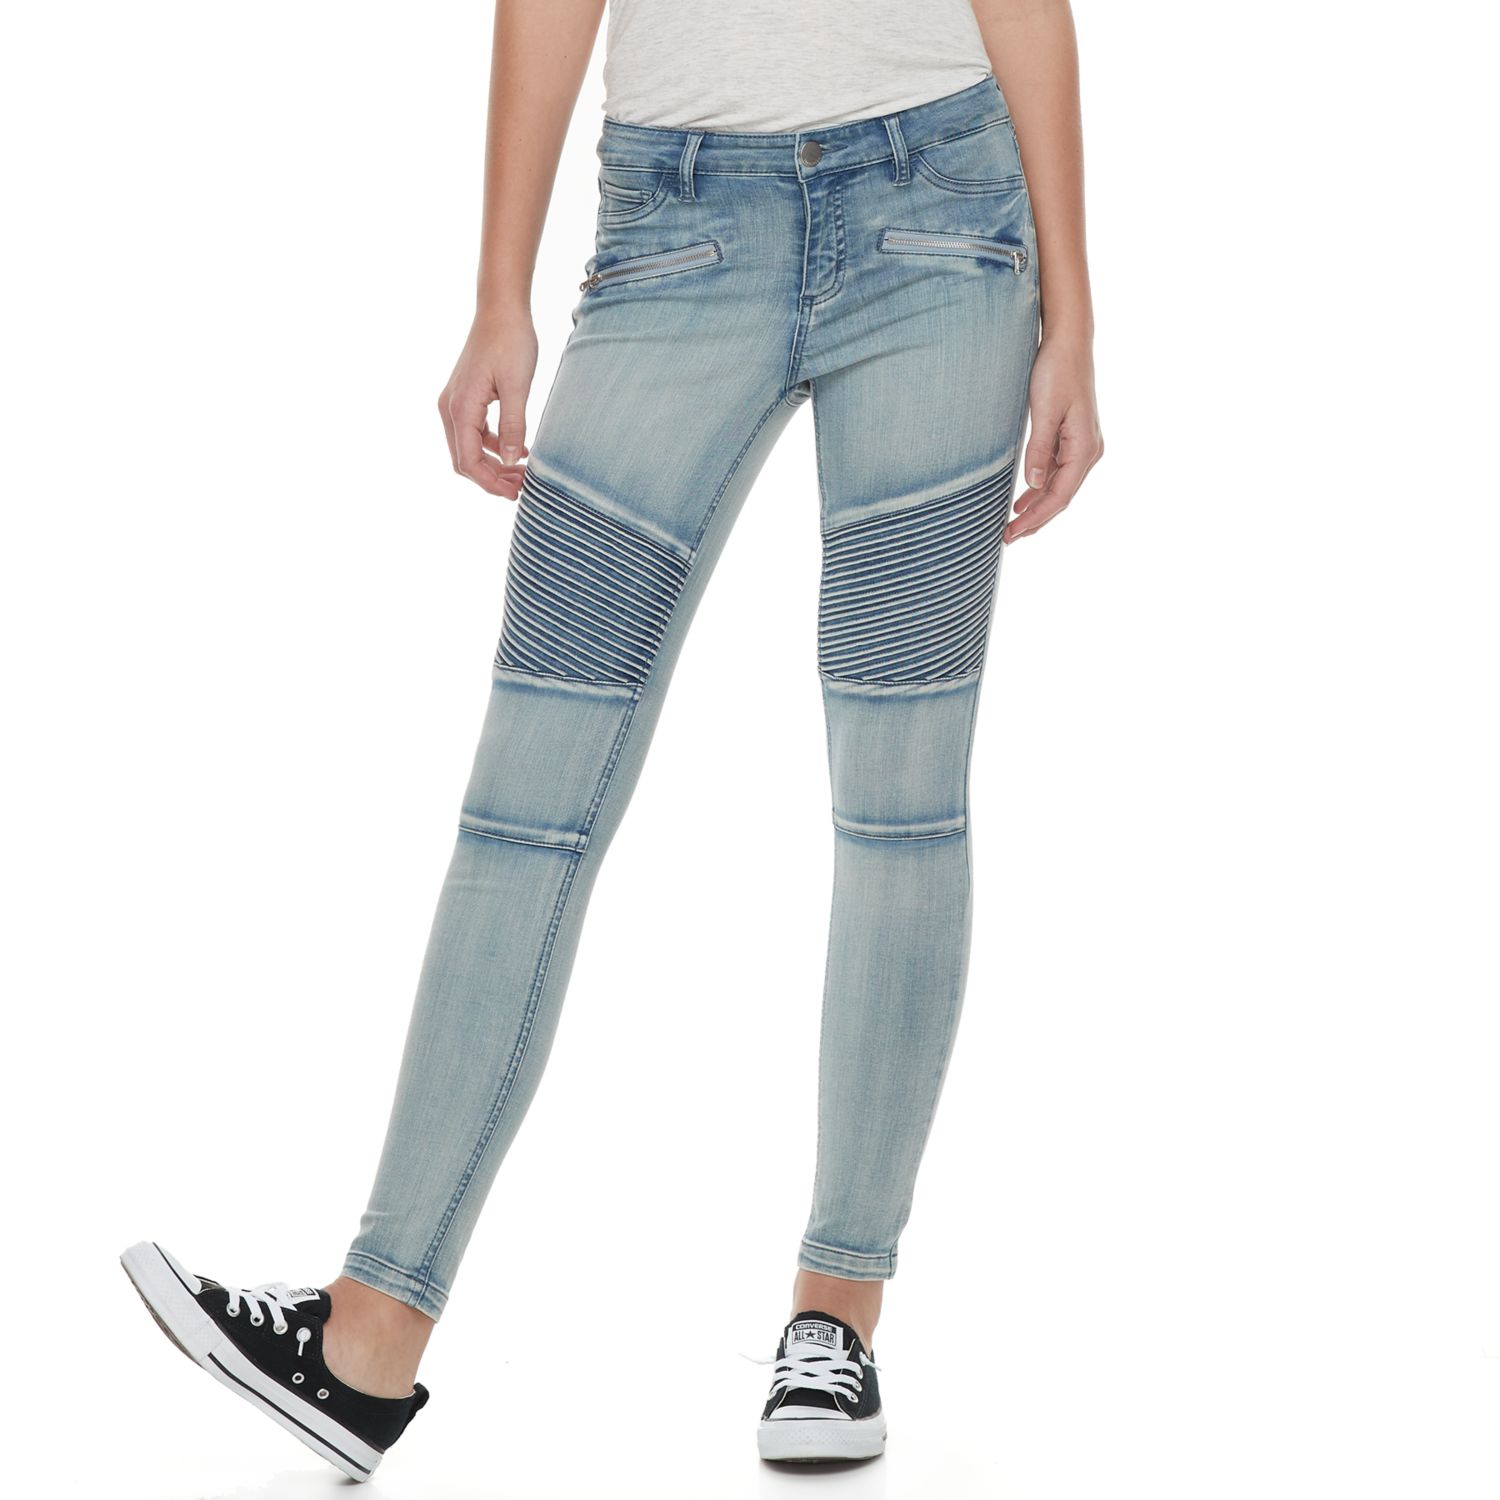 tinseltown moto jeans